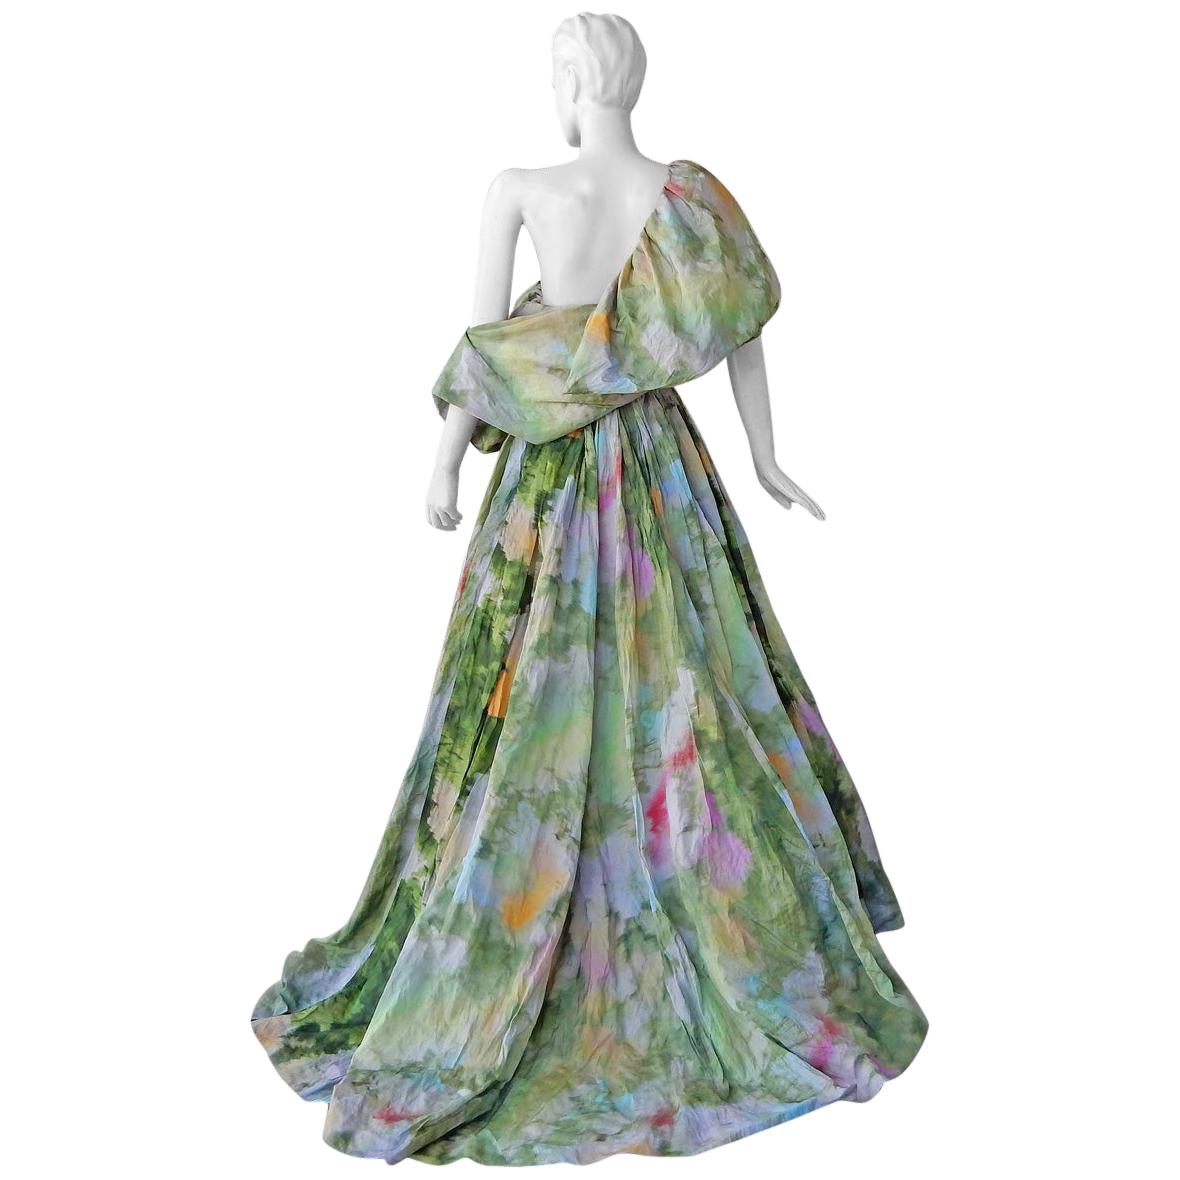  Rosie Assoulin "Monet" Inspired Runway Gown NWT